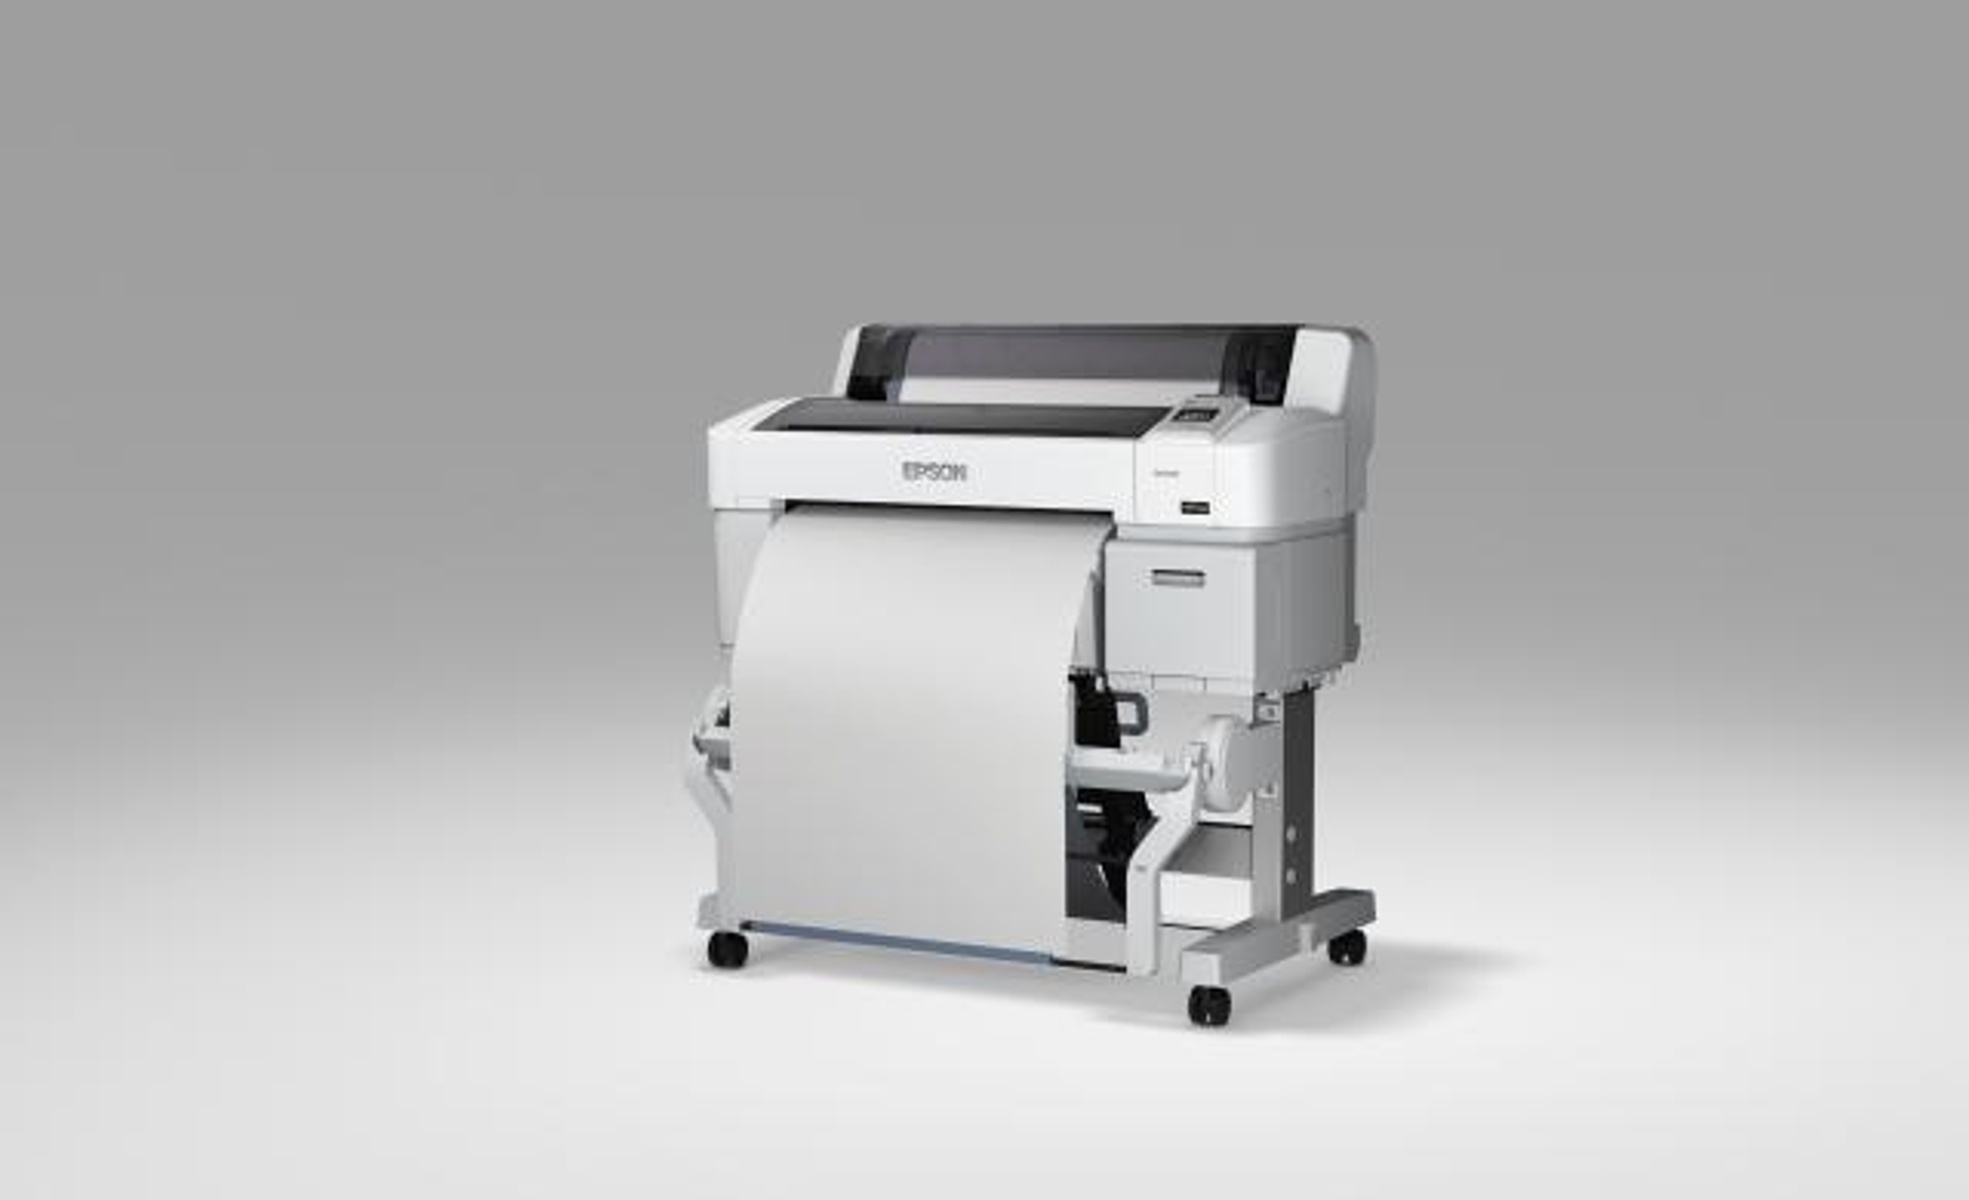 EPSON Multifunktionsdrucker SC-T3200